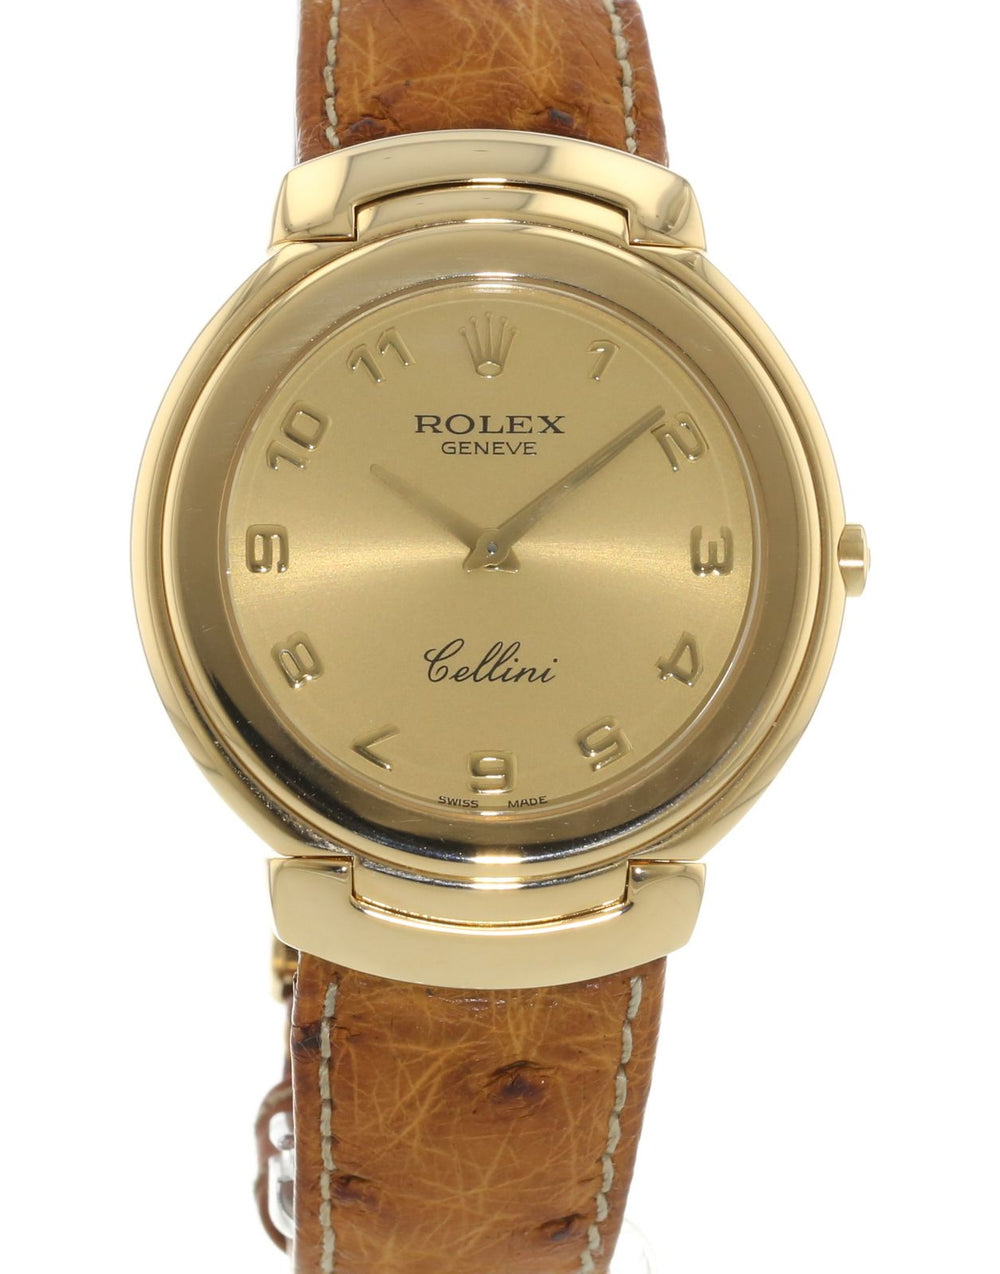 Rolex Cellini 6623/8 1